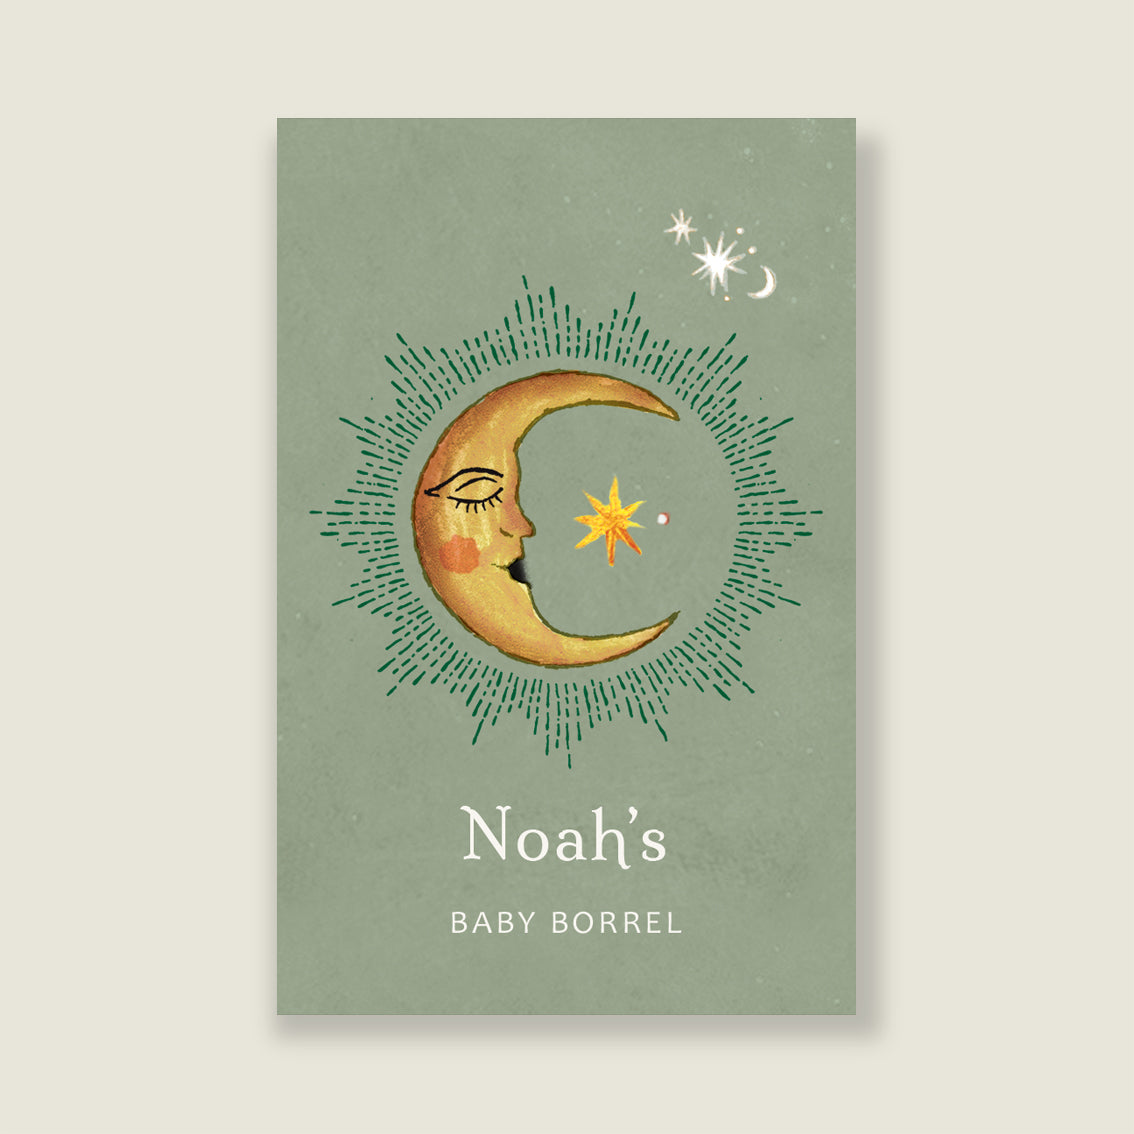 Maternity party card Moon lightgreen